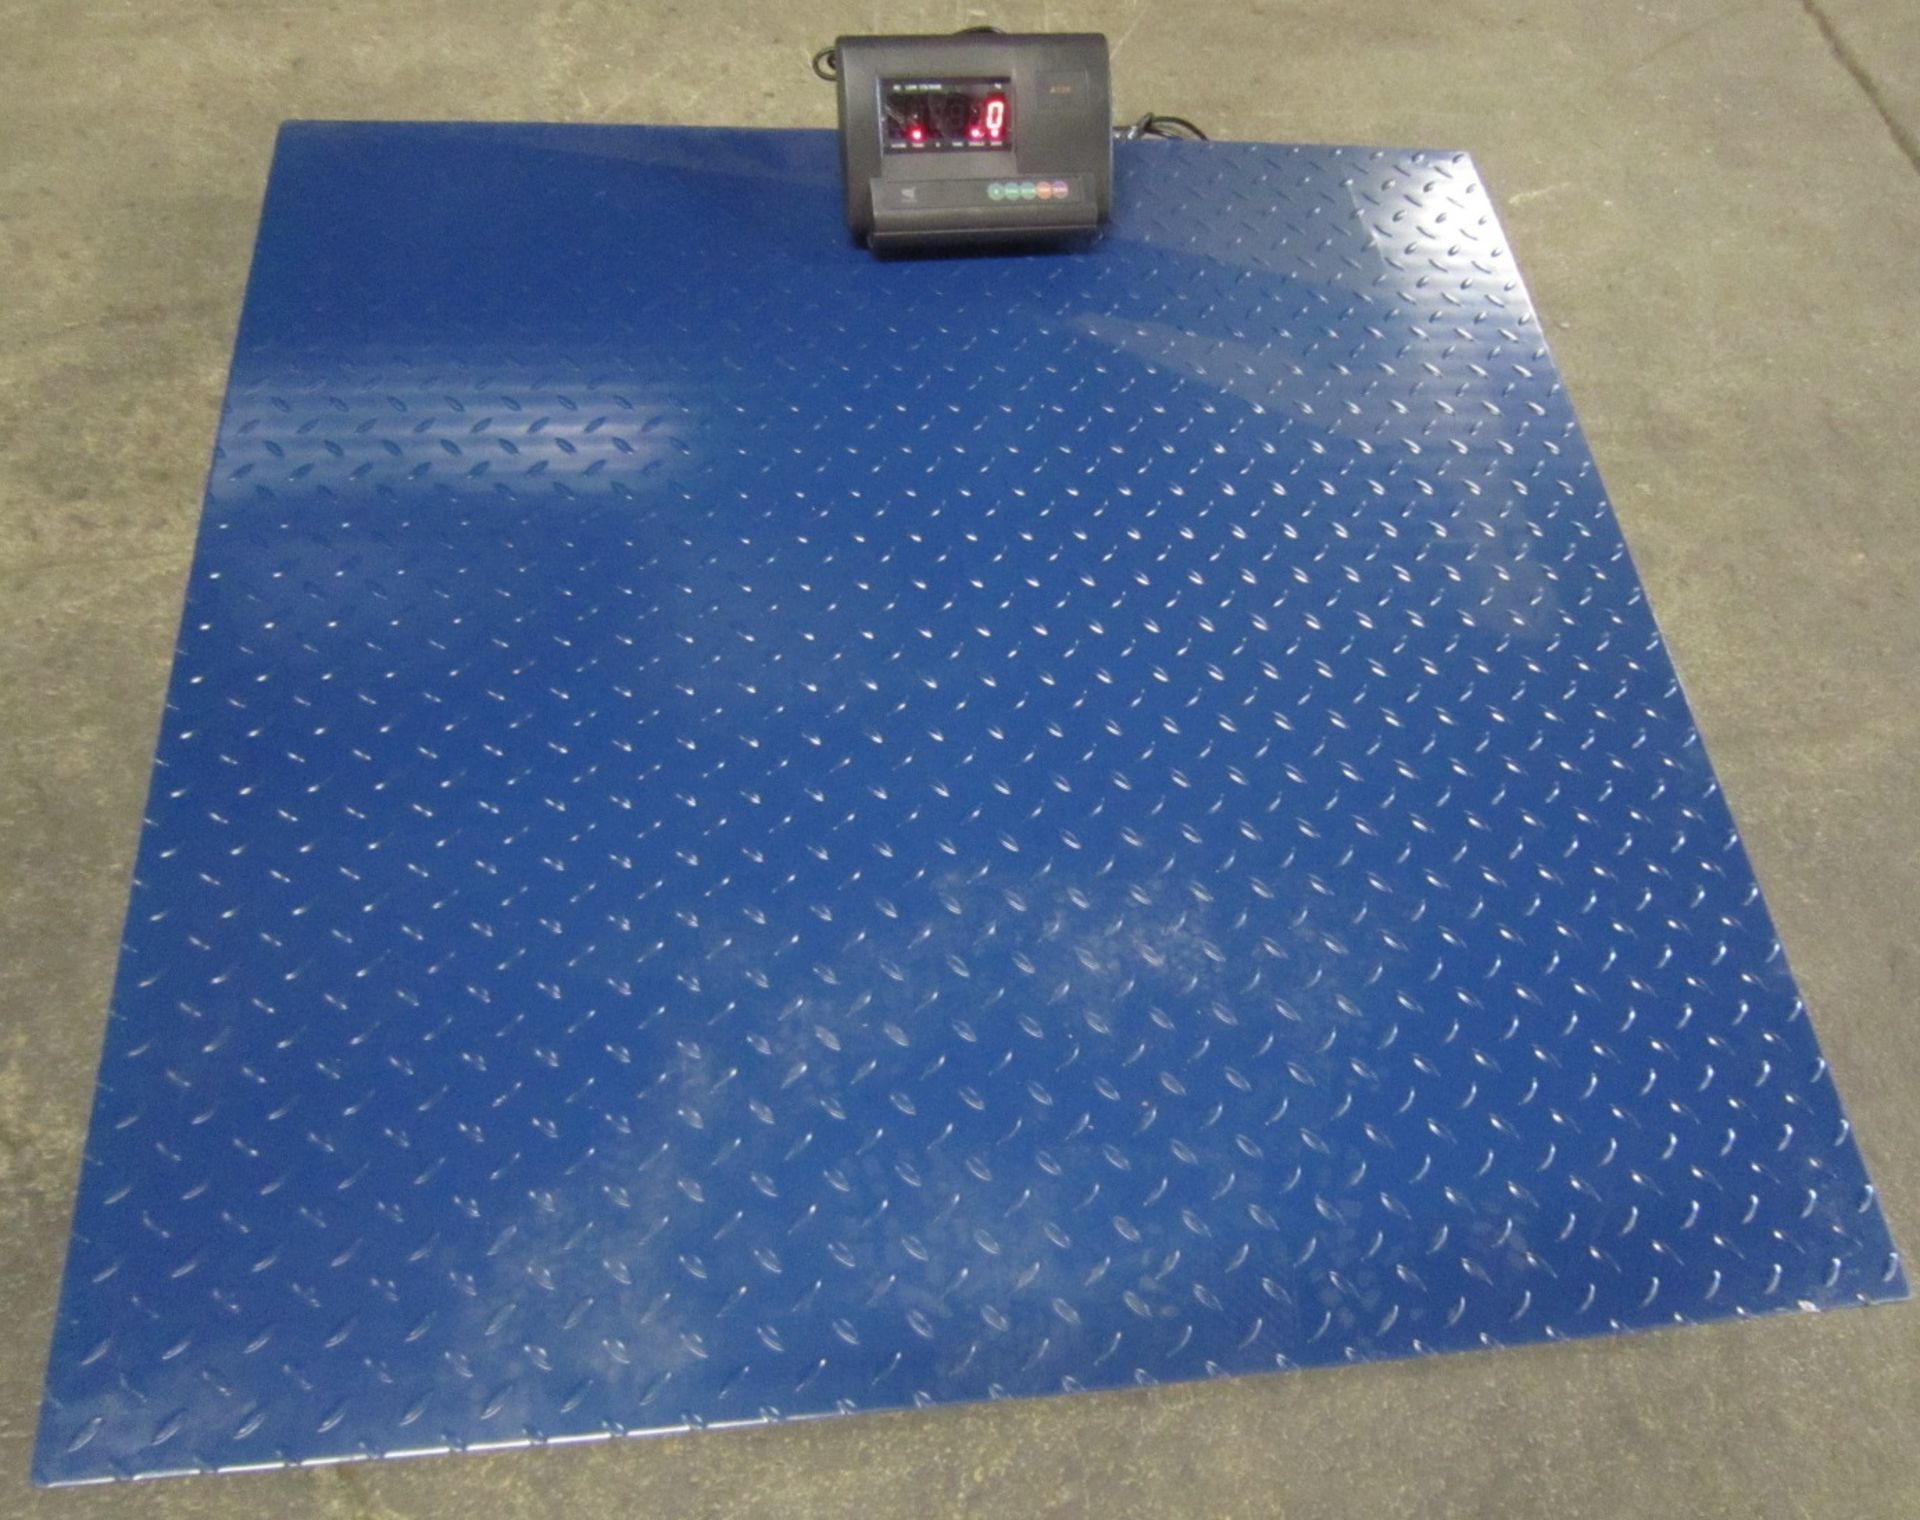 Digital floor scale 6000lbs capacity with DRO 48x48" 1lb accuracy